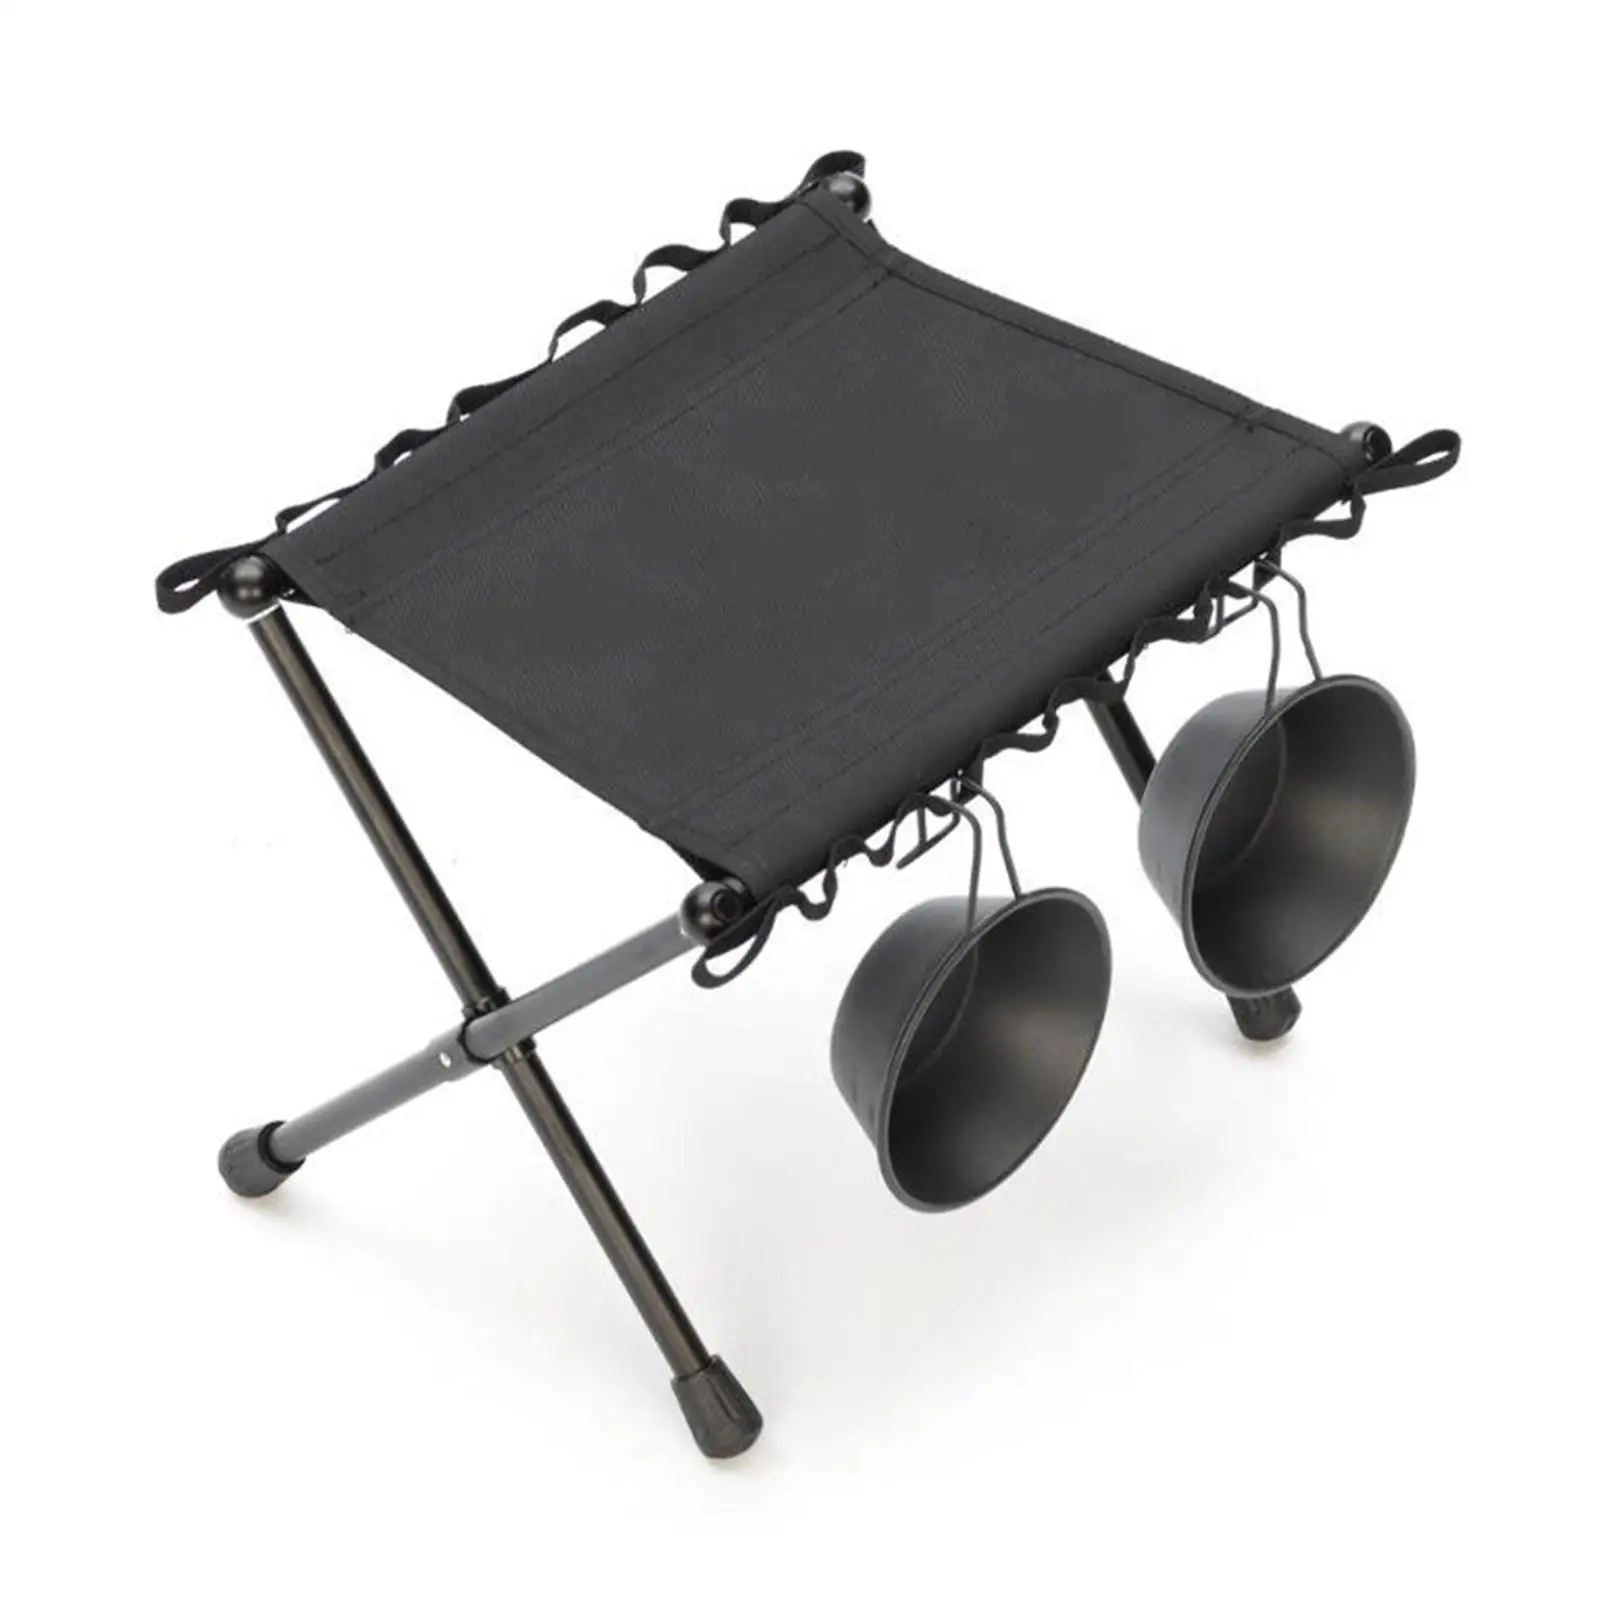 Portable Camping Chair Durable Reusable for Outdoor Activity